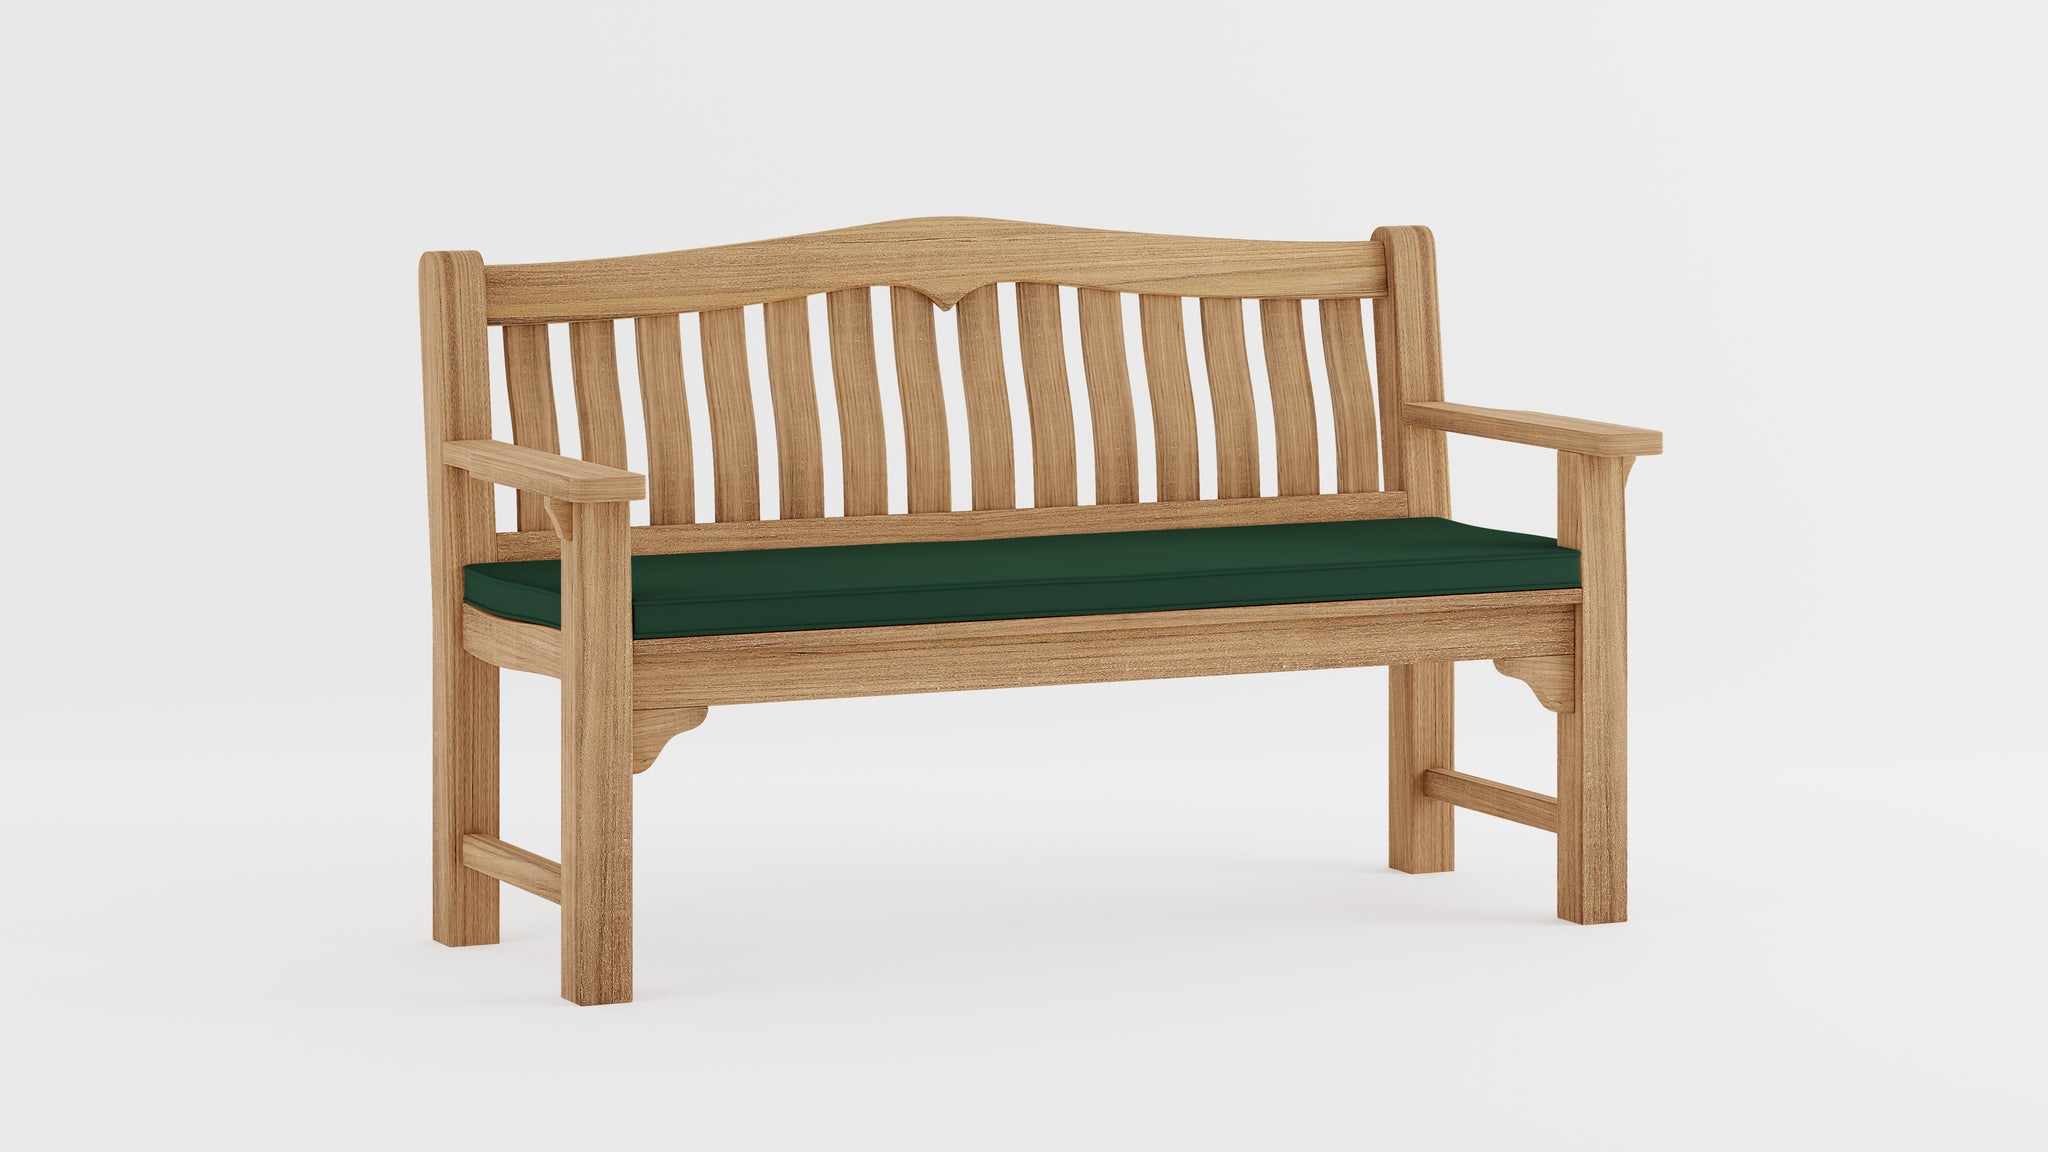 Hereford Teak Garden Bench 3 Seater 150cm  with Green Cushion